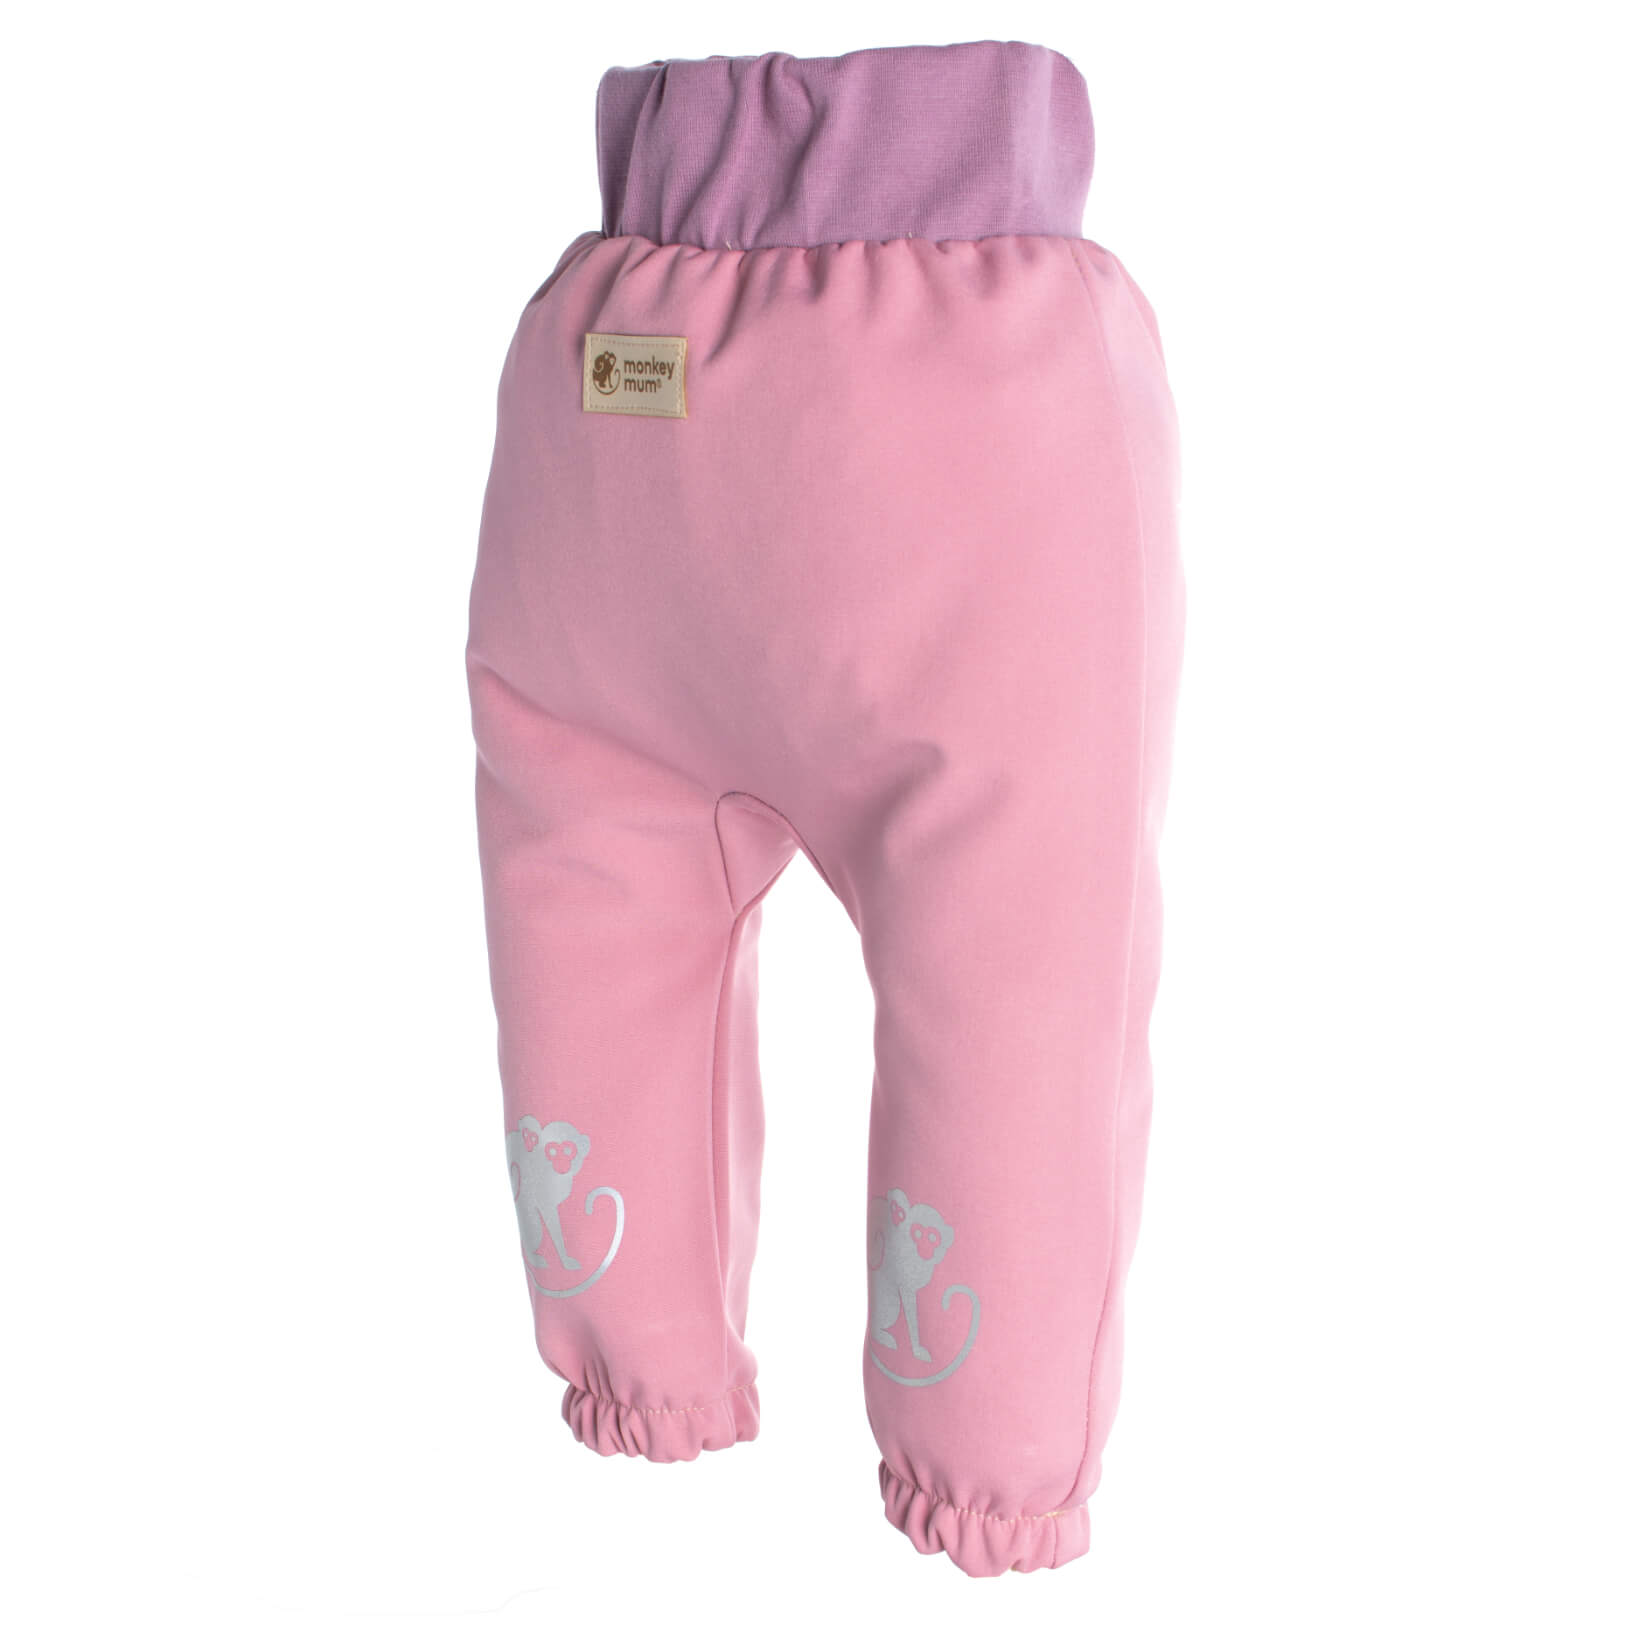 Pantaloni Softshell Per Bambini Monkey Mum® Con Membrana - Zucchero Filato 74